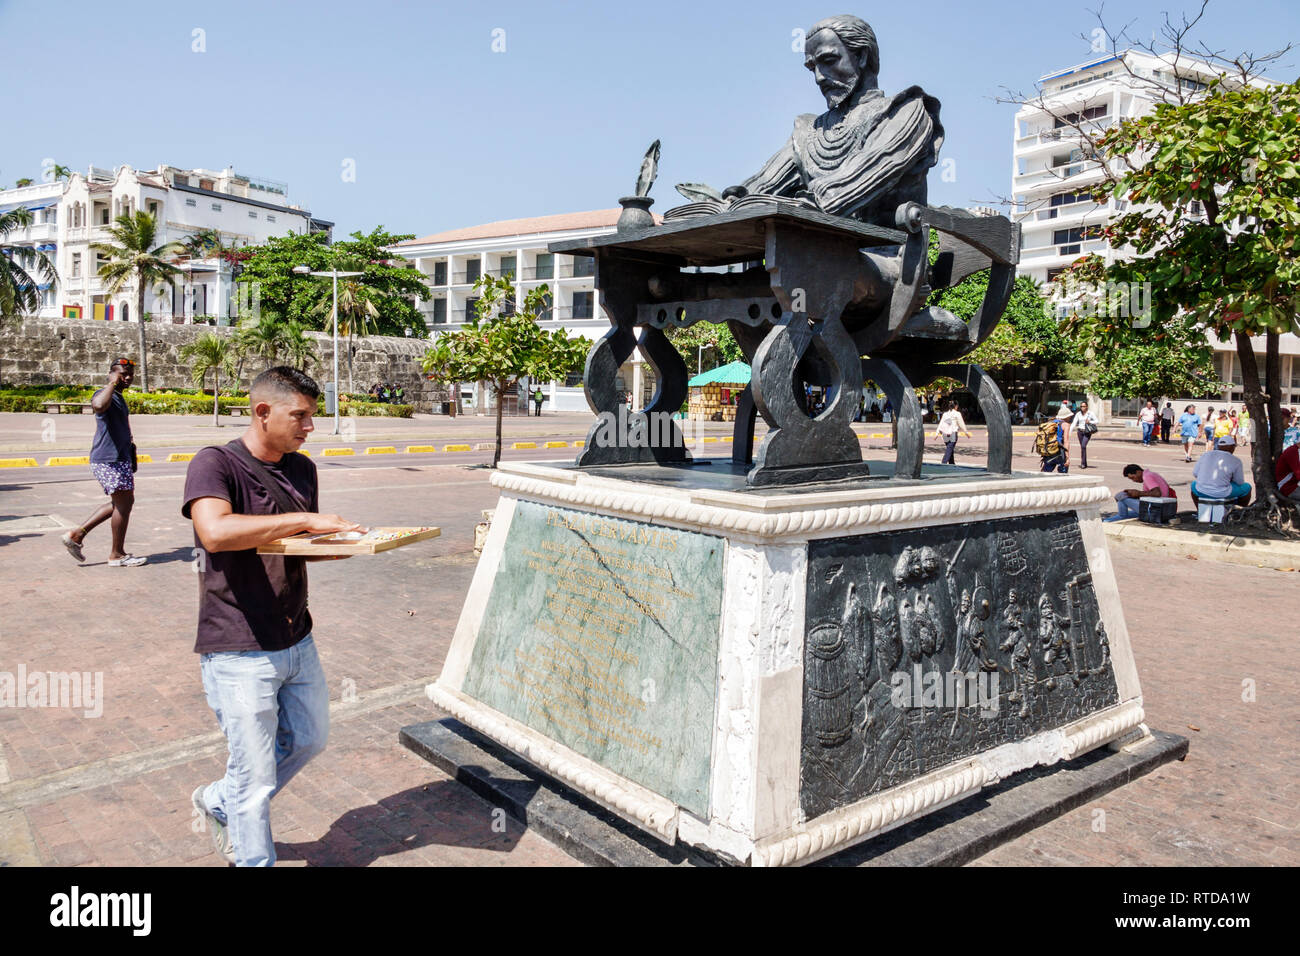 Cartagena Colombia,Hispanic resident residents,Plaza Cervantes,statue,sculpture,Miguel de Cervantes Saavedra by Hector Lombana,man men male,COL1901190 Stock Photo